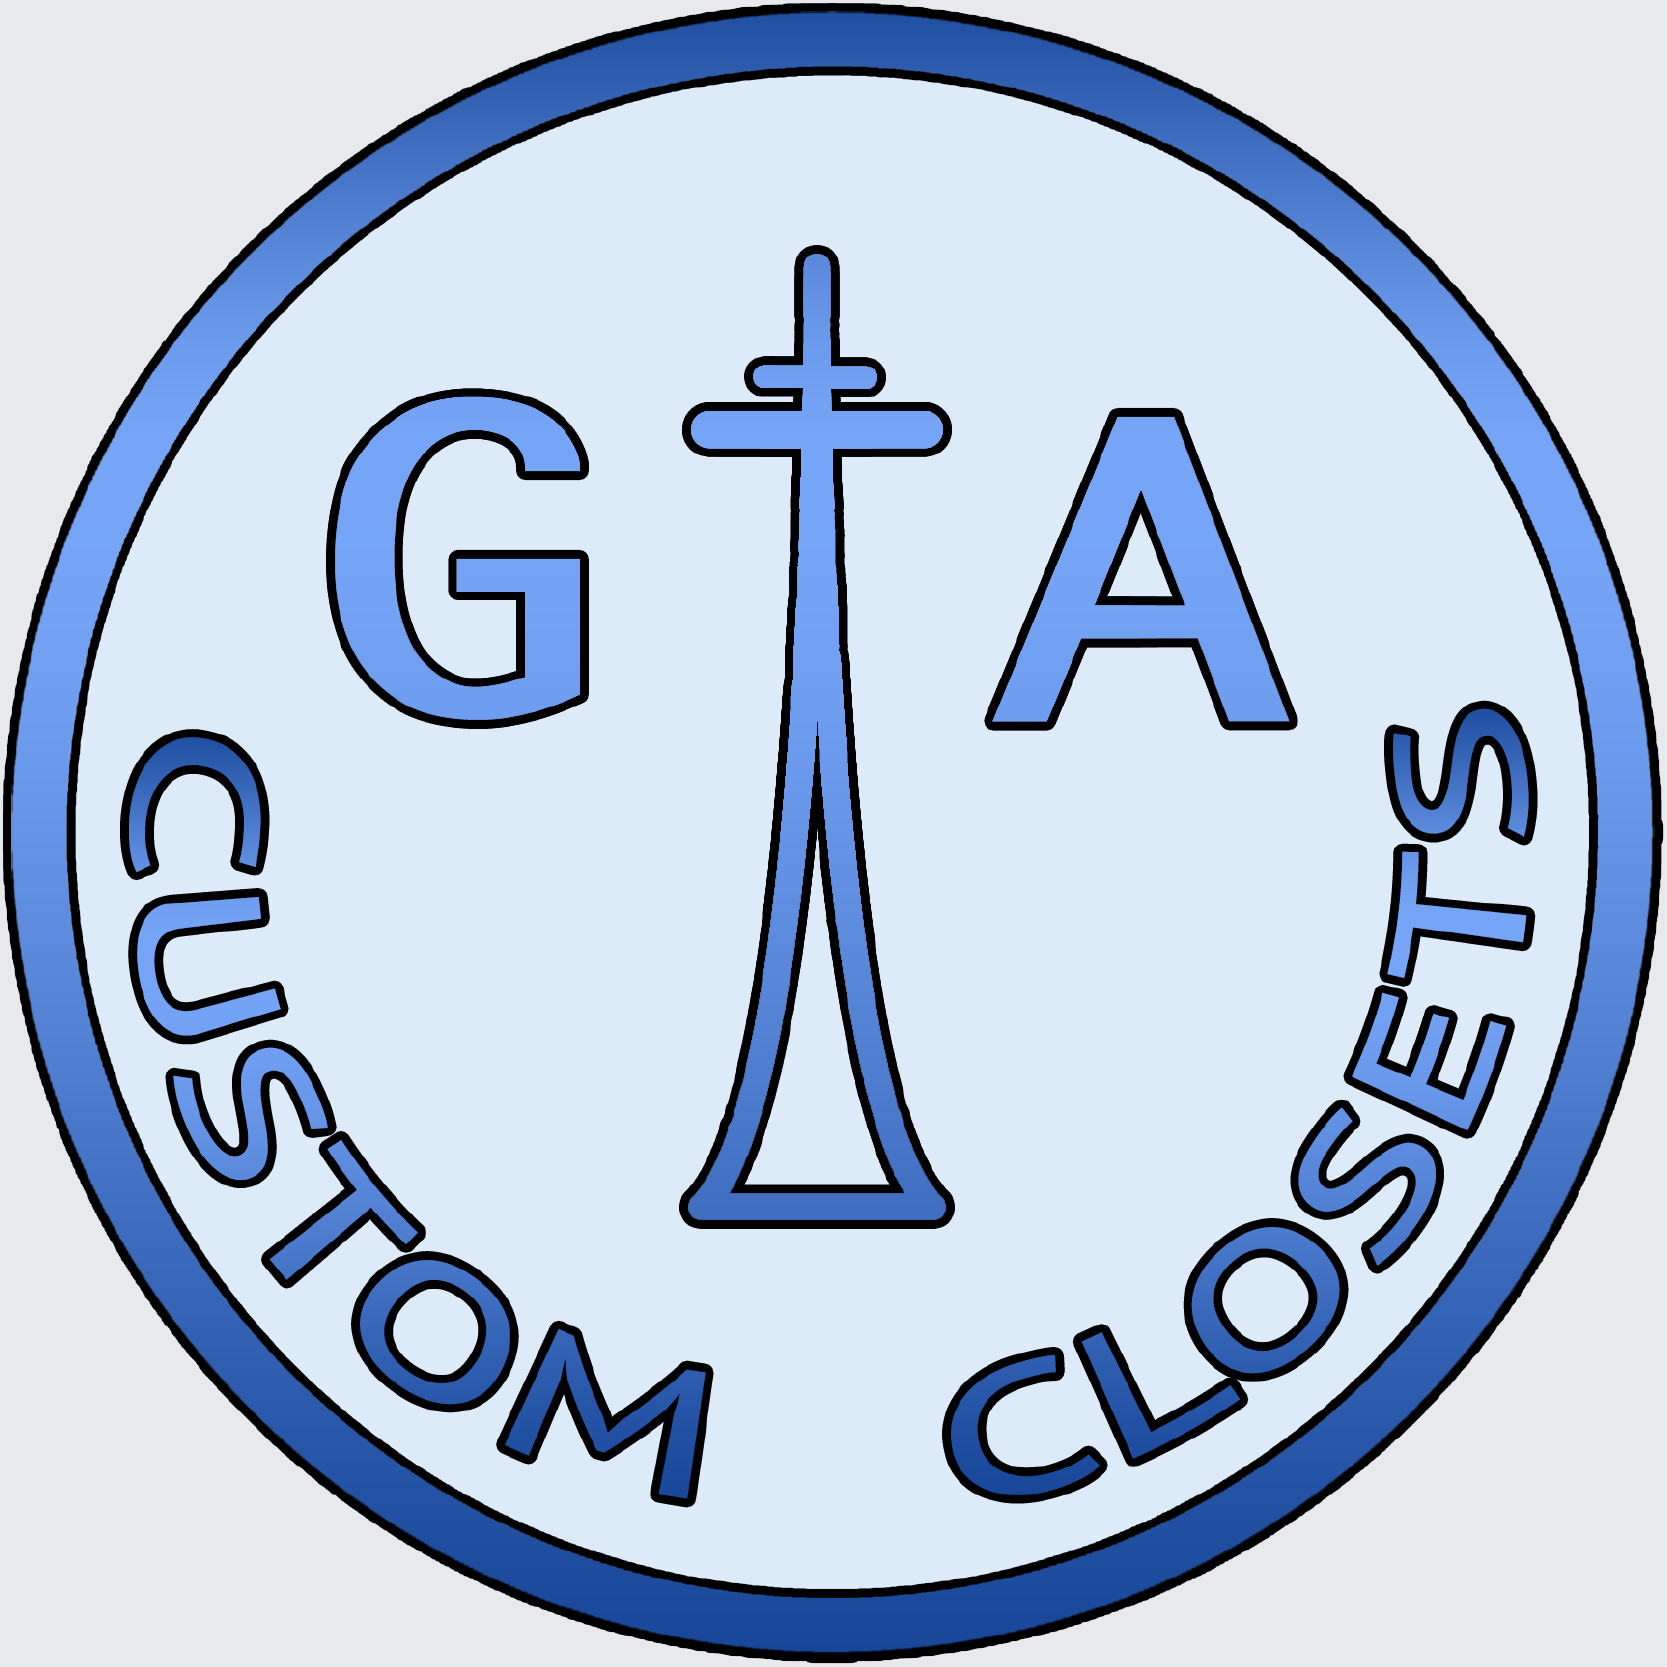 GTA Custom Closets's logo